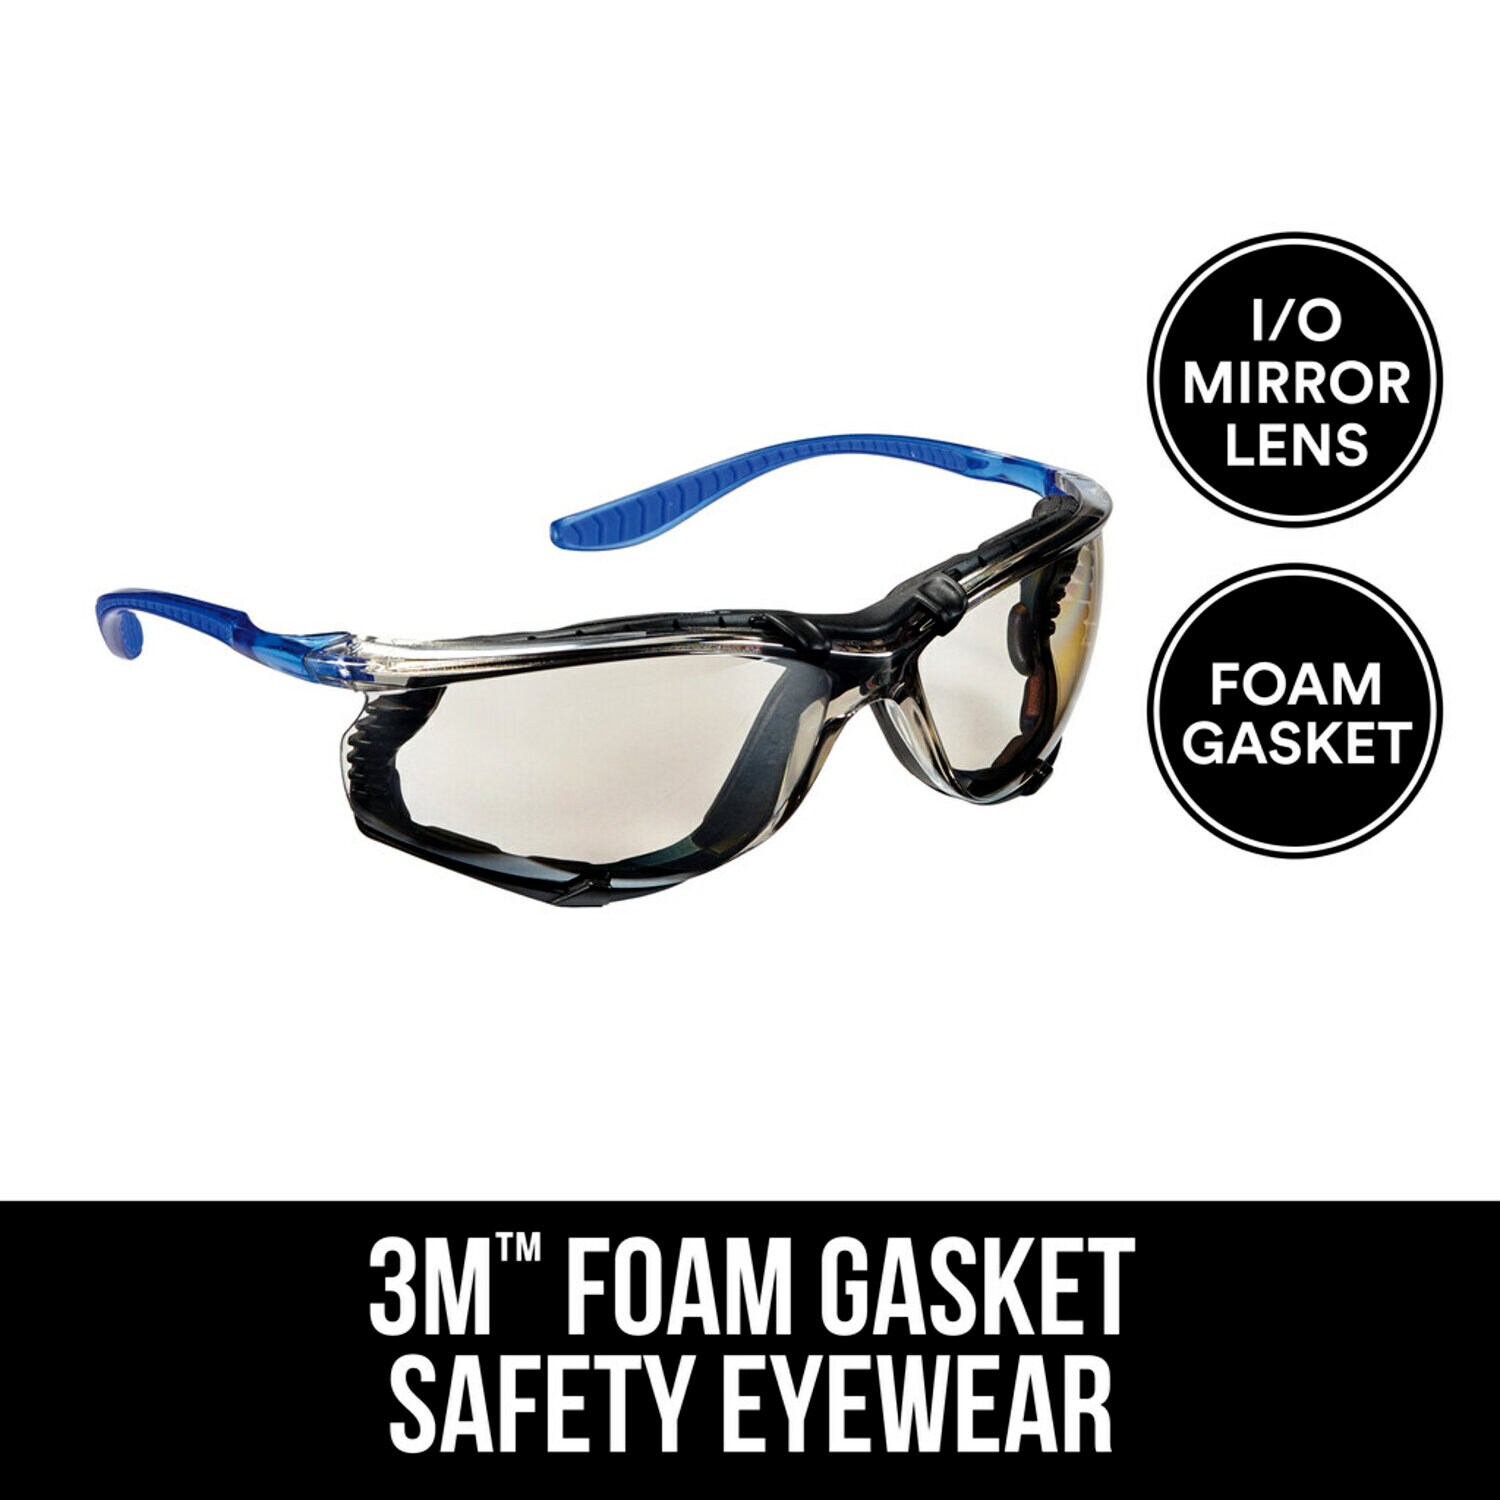 7100158661 - 3M Performance Eyewear Gasket Design 47200-HZ6-NA, Mirror Lens,
Anti-Fog, 6ea/css